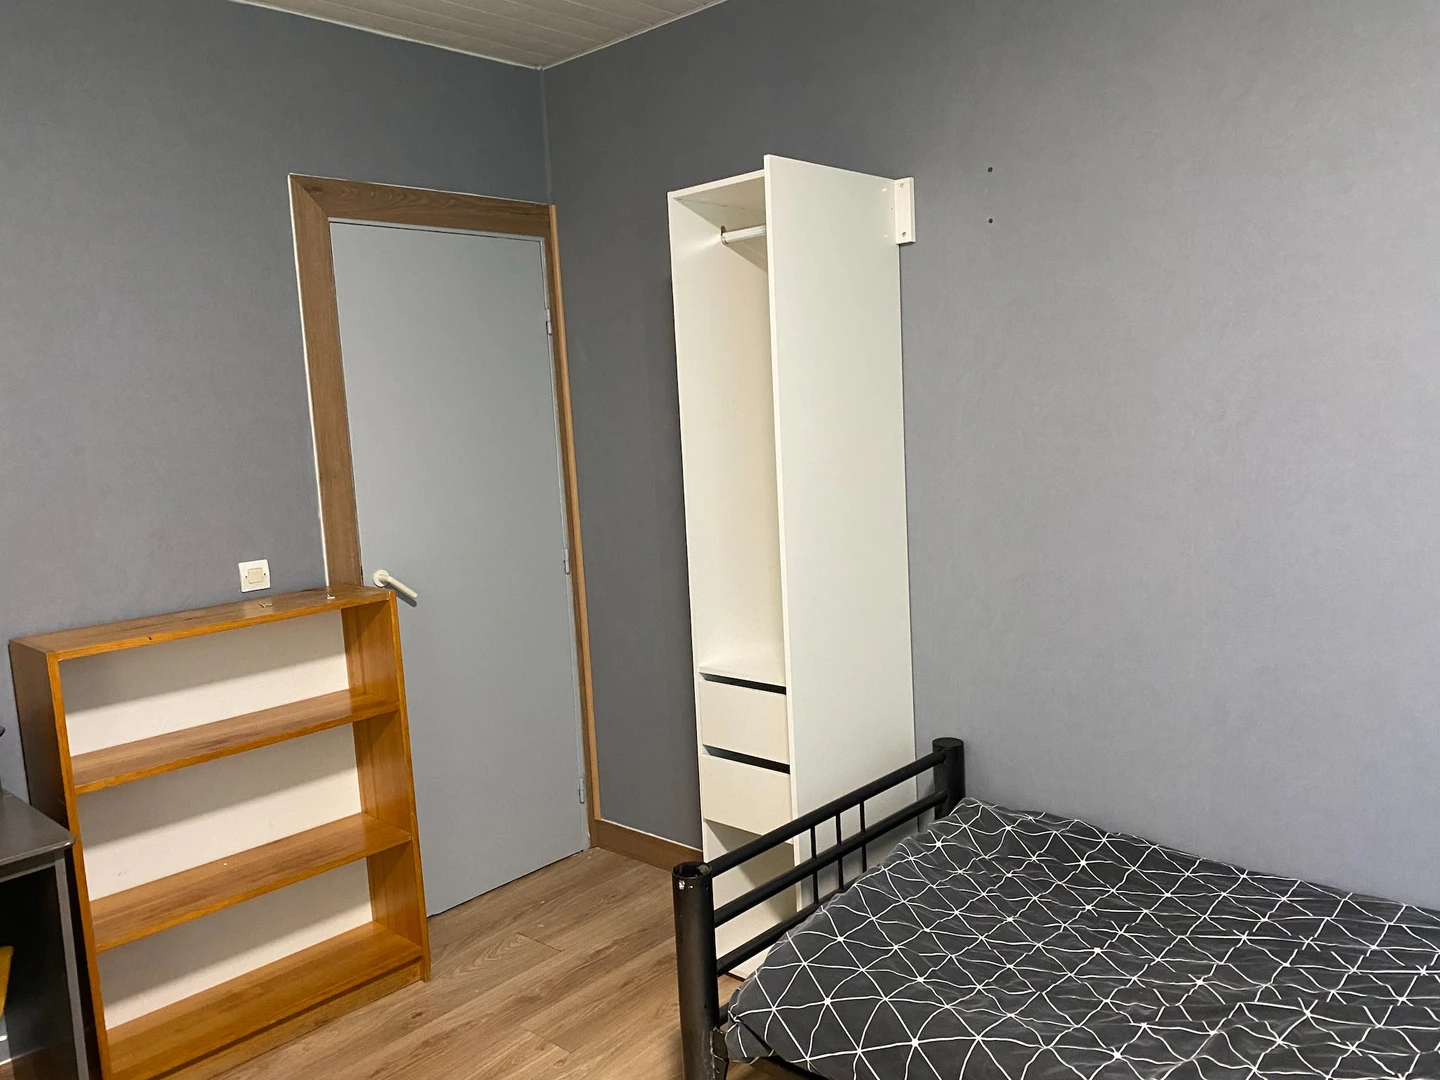 Shared room in 3-bedroom flat paris